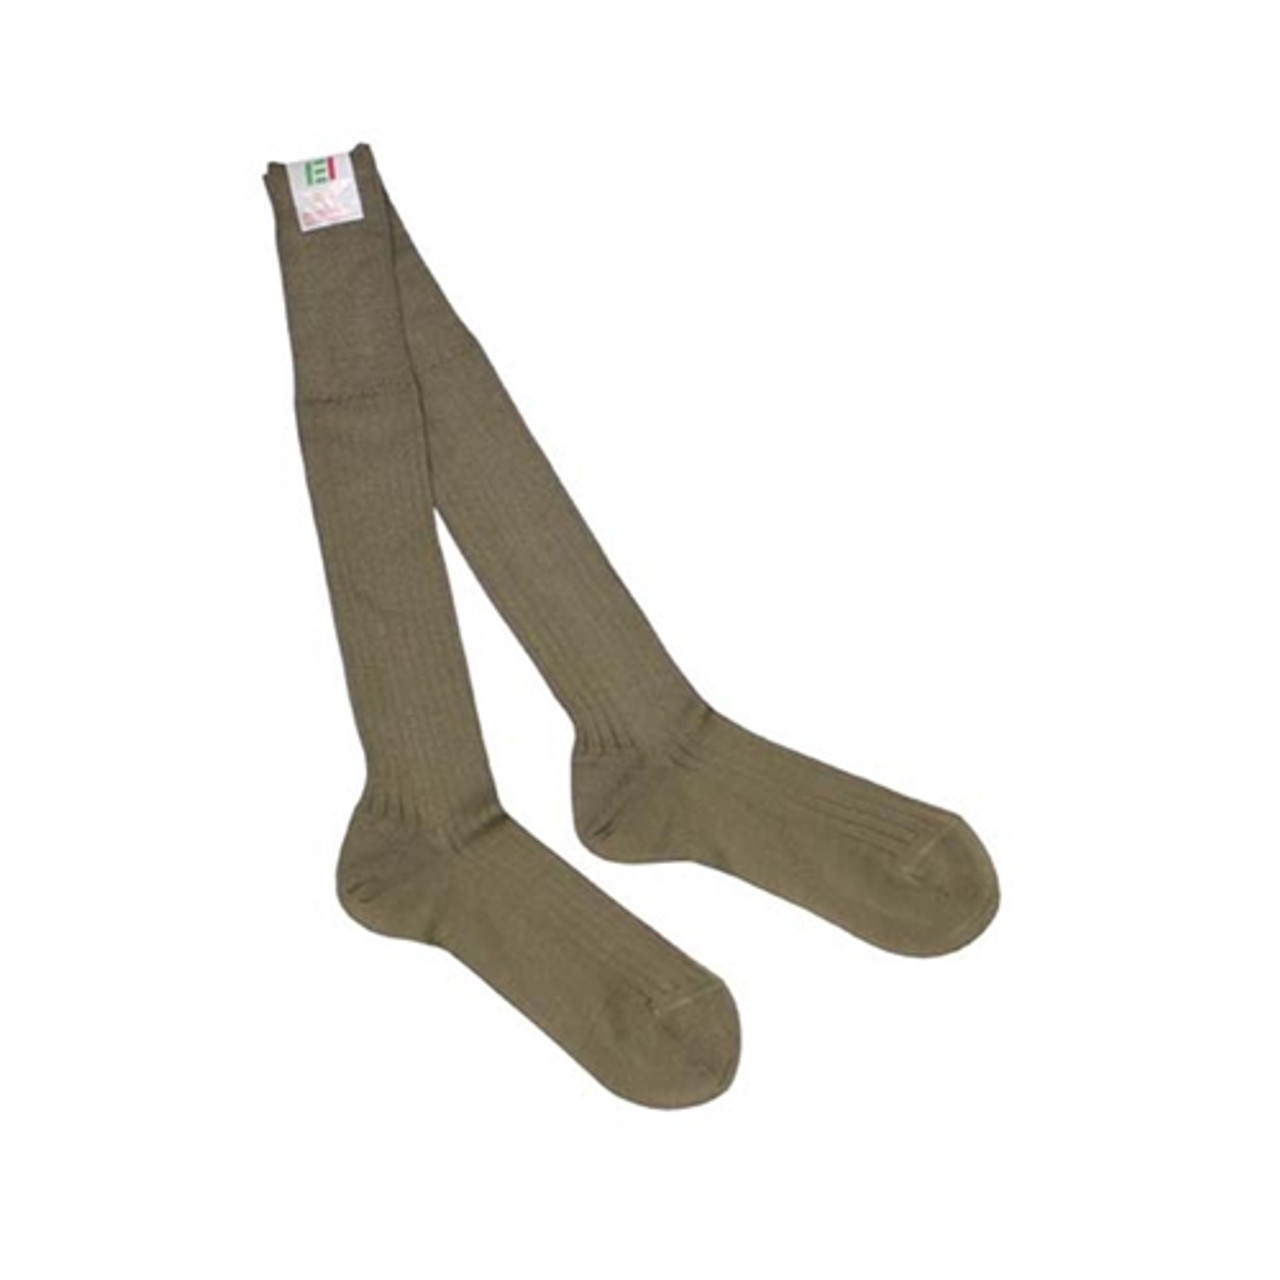 Italian Army Cotton Socks